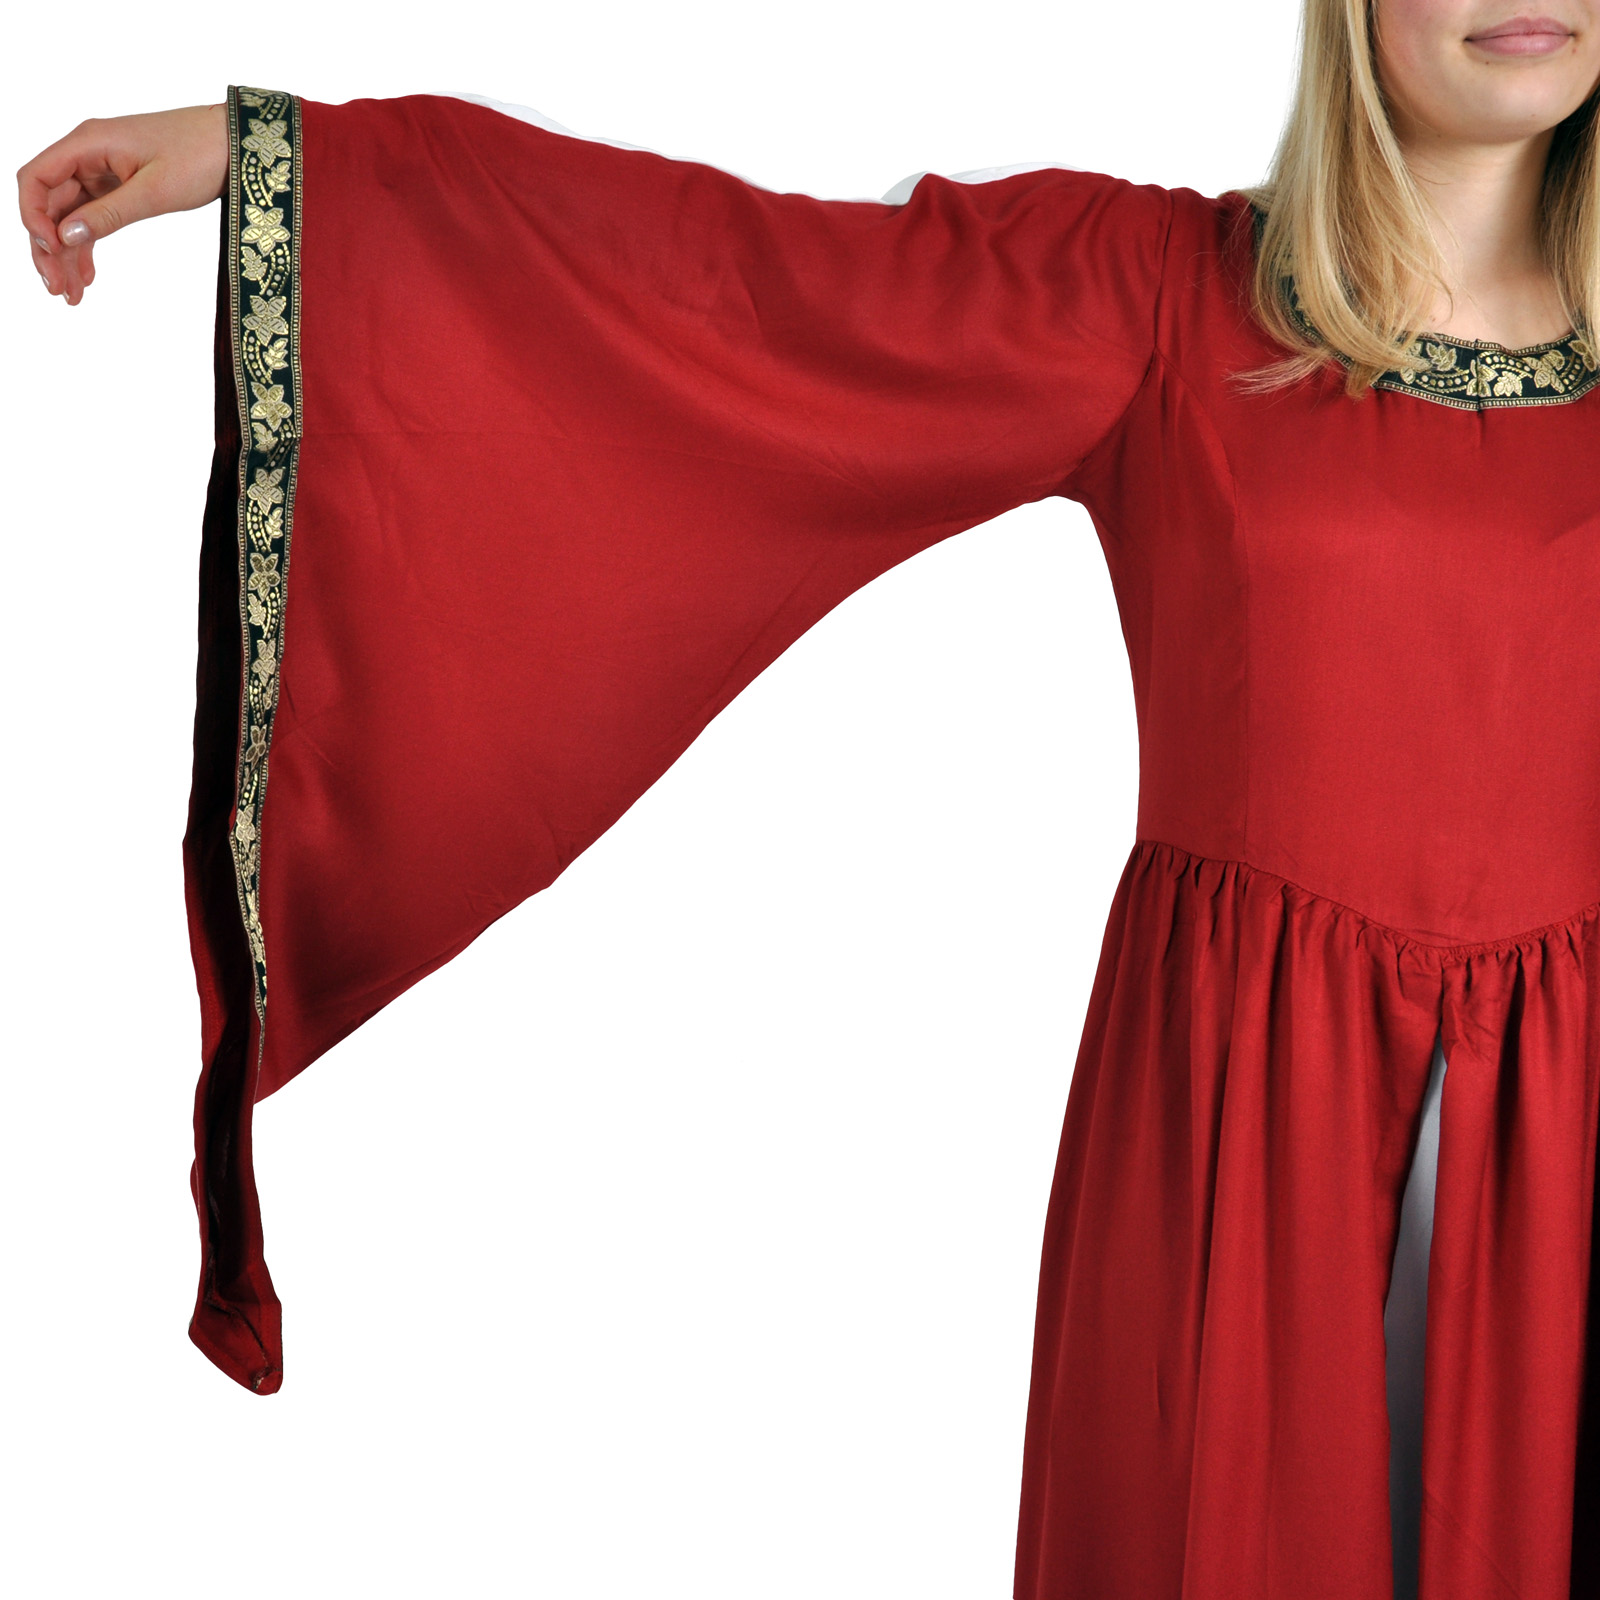 Medieval dress Leila red